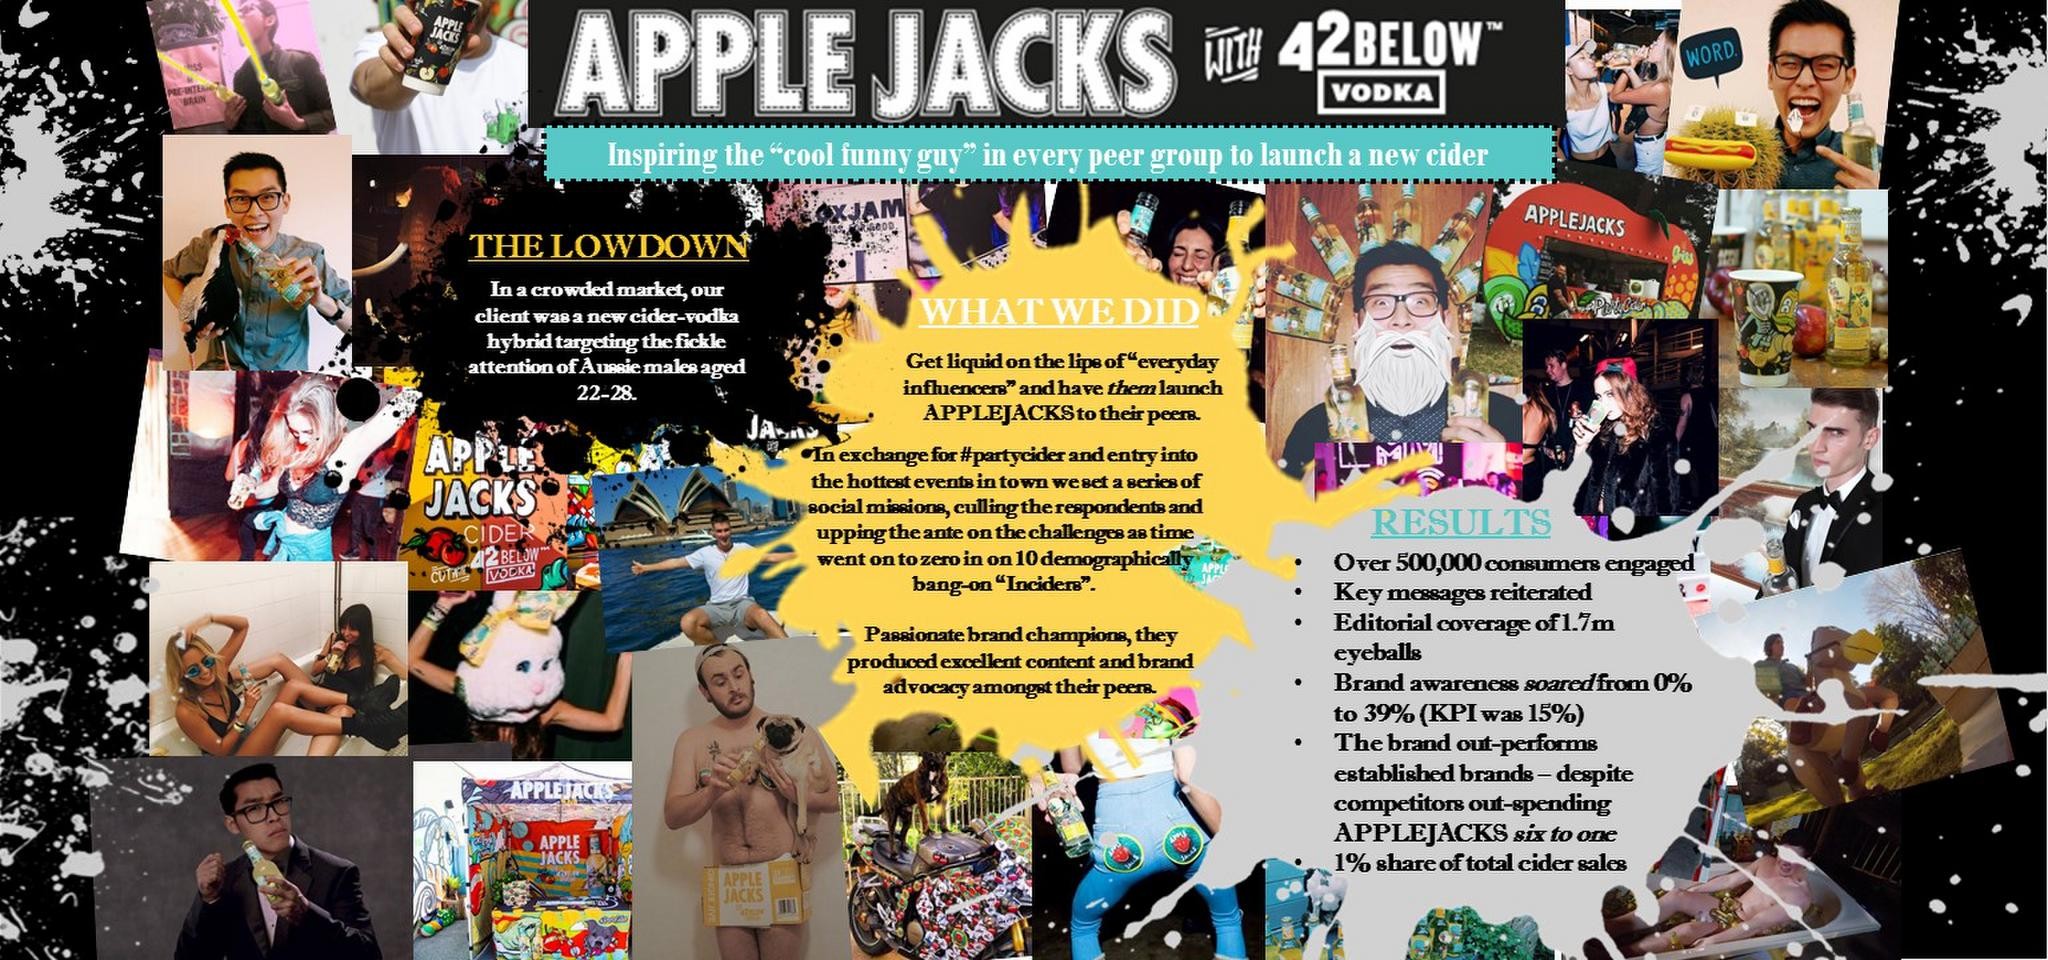 Apple Jacks InCider campaign